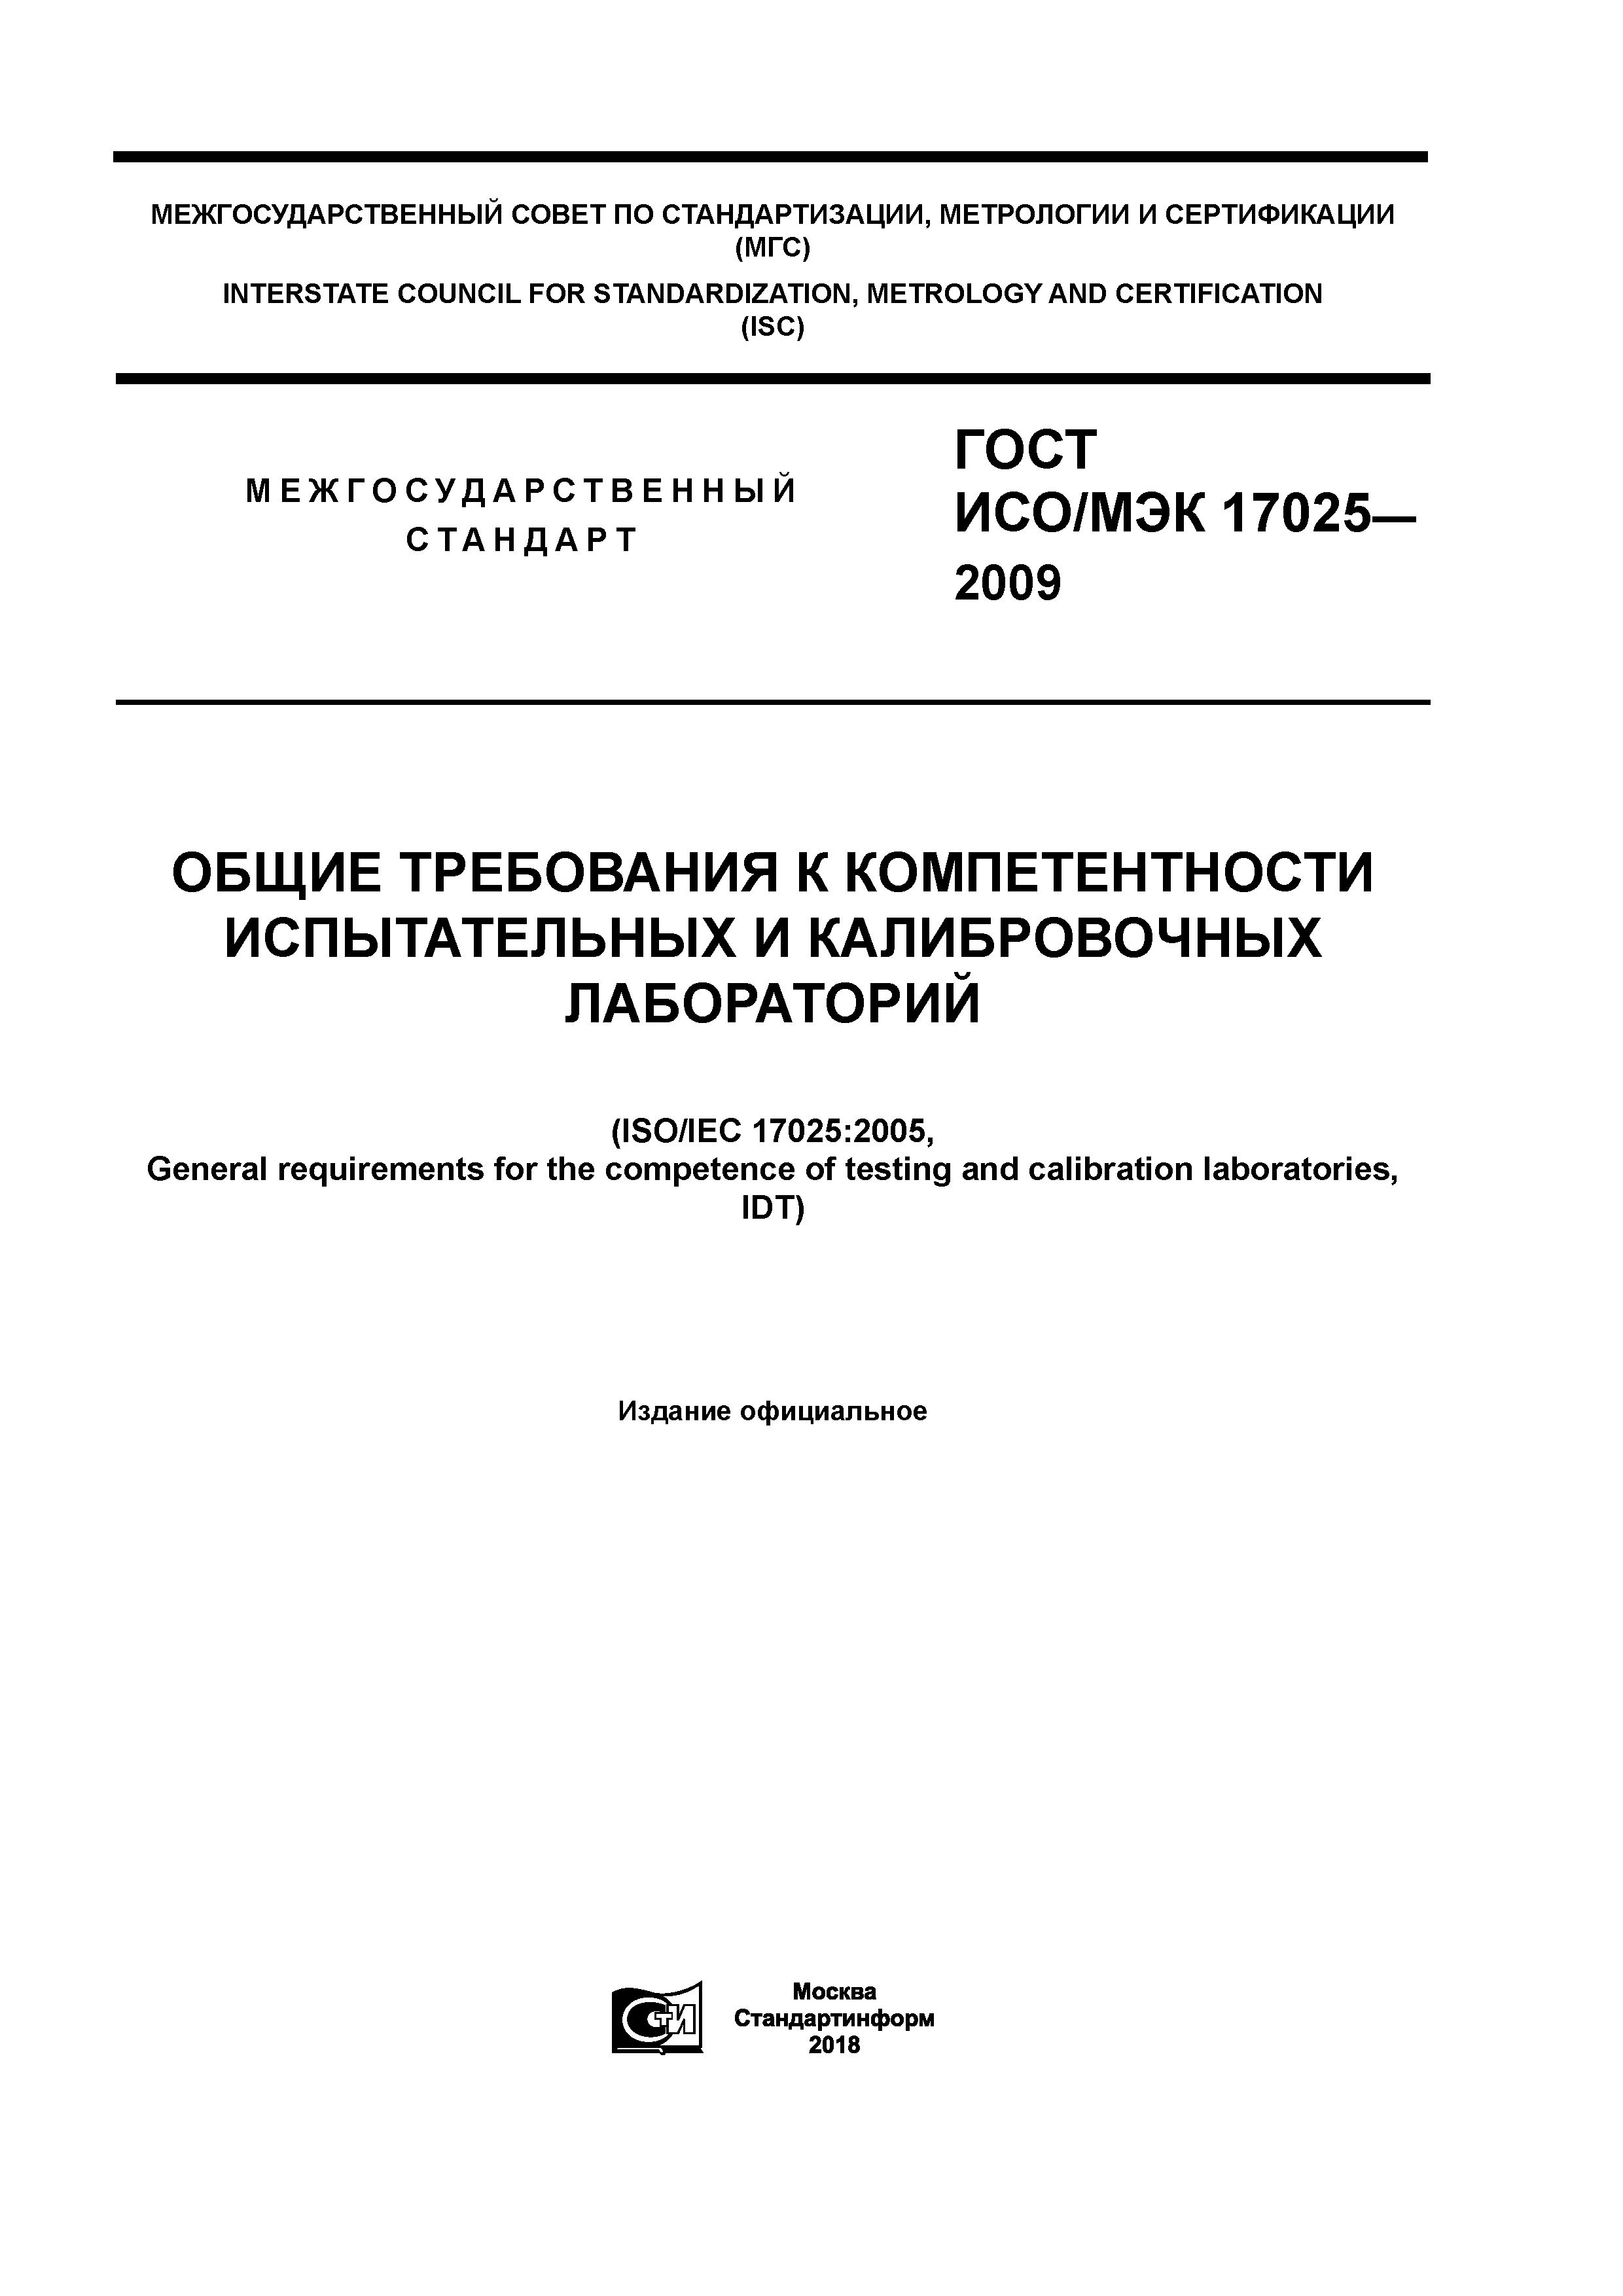 ГОСТ ИСО/МЭК 17025-2009